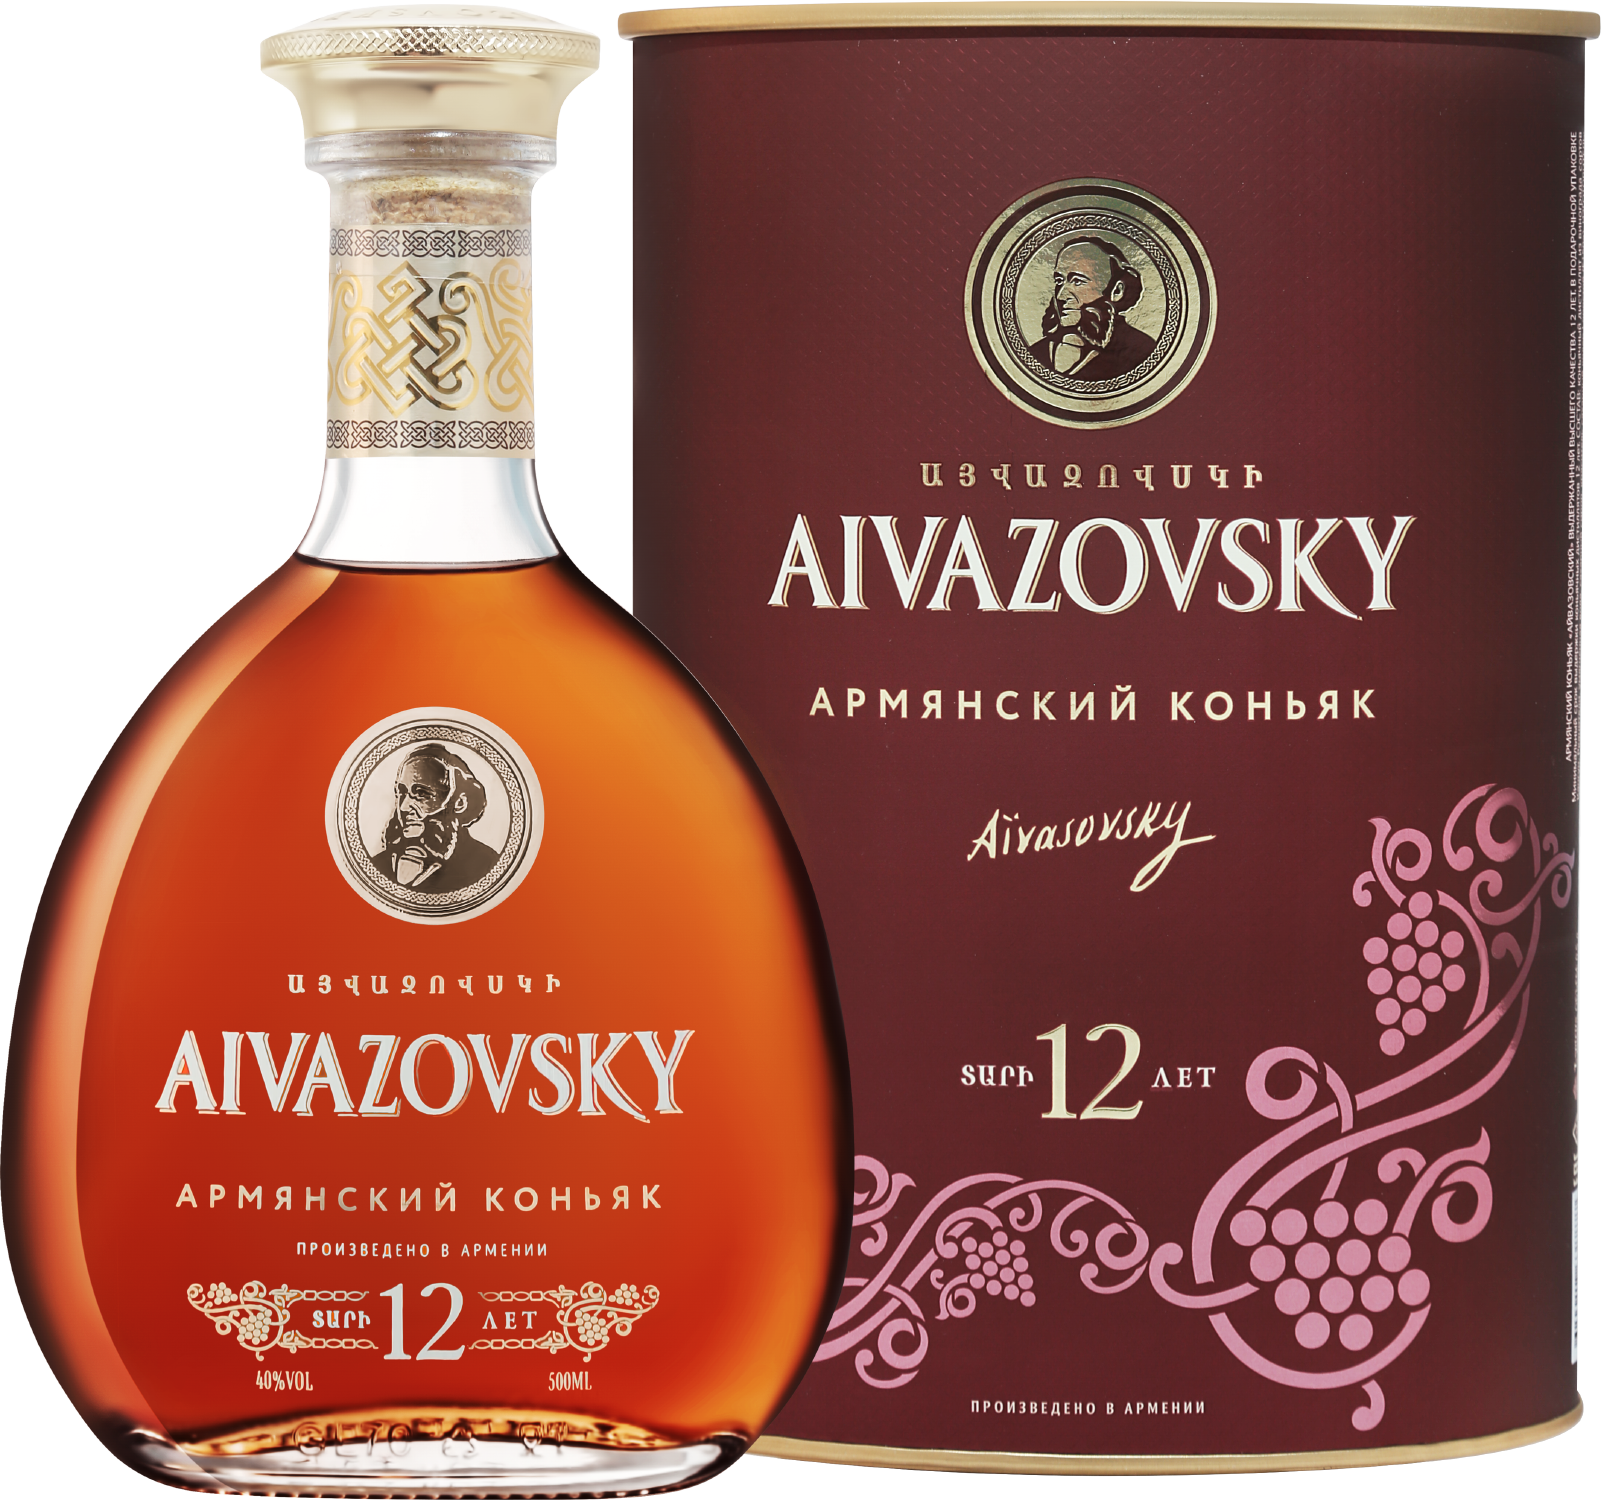 Aivazovsky Old Armenian Brandy 12 Y.O. (gift box) aivazovsky armenian brandy 7 y o